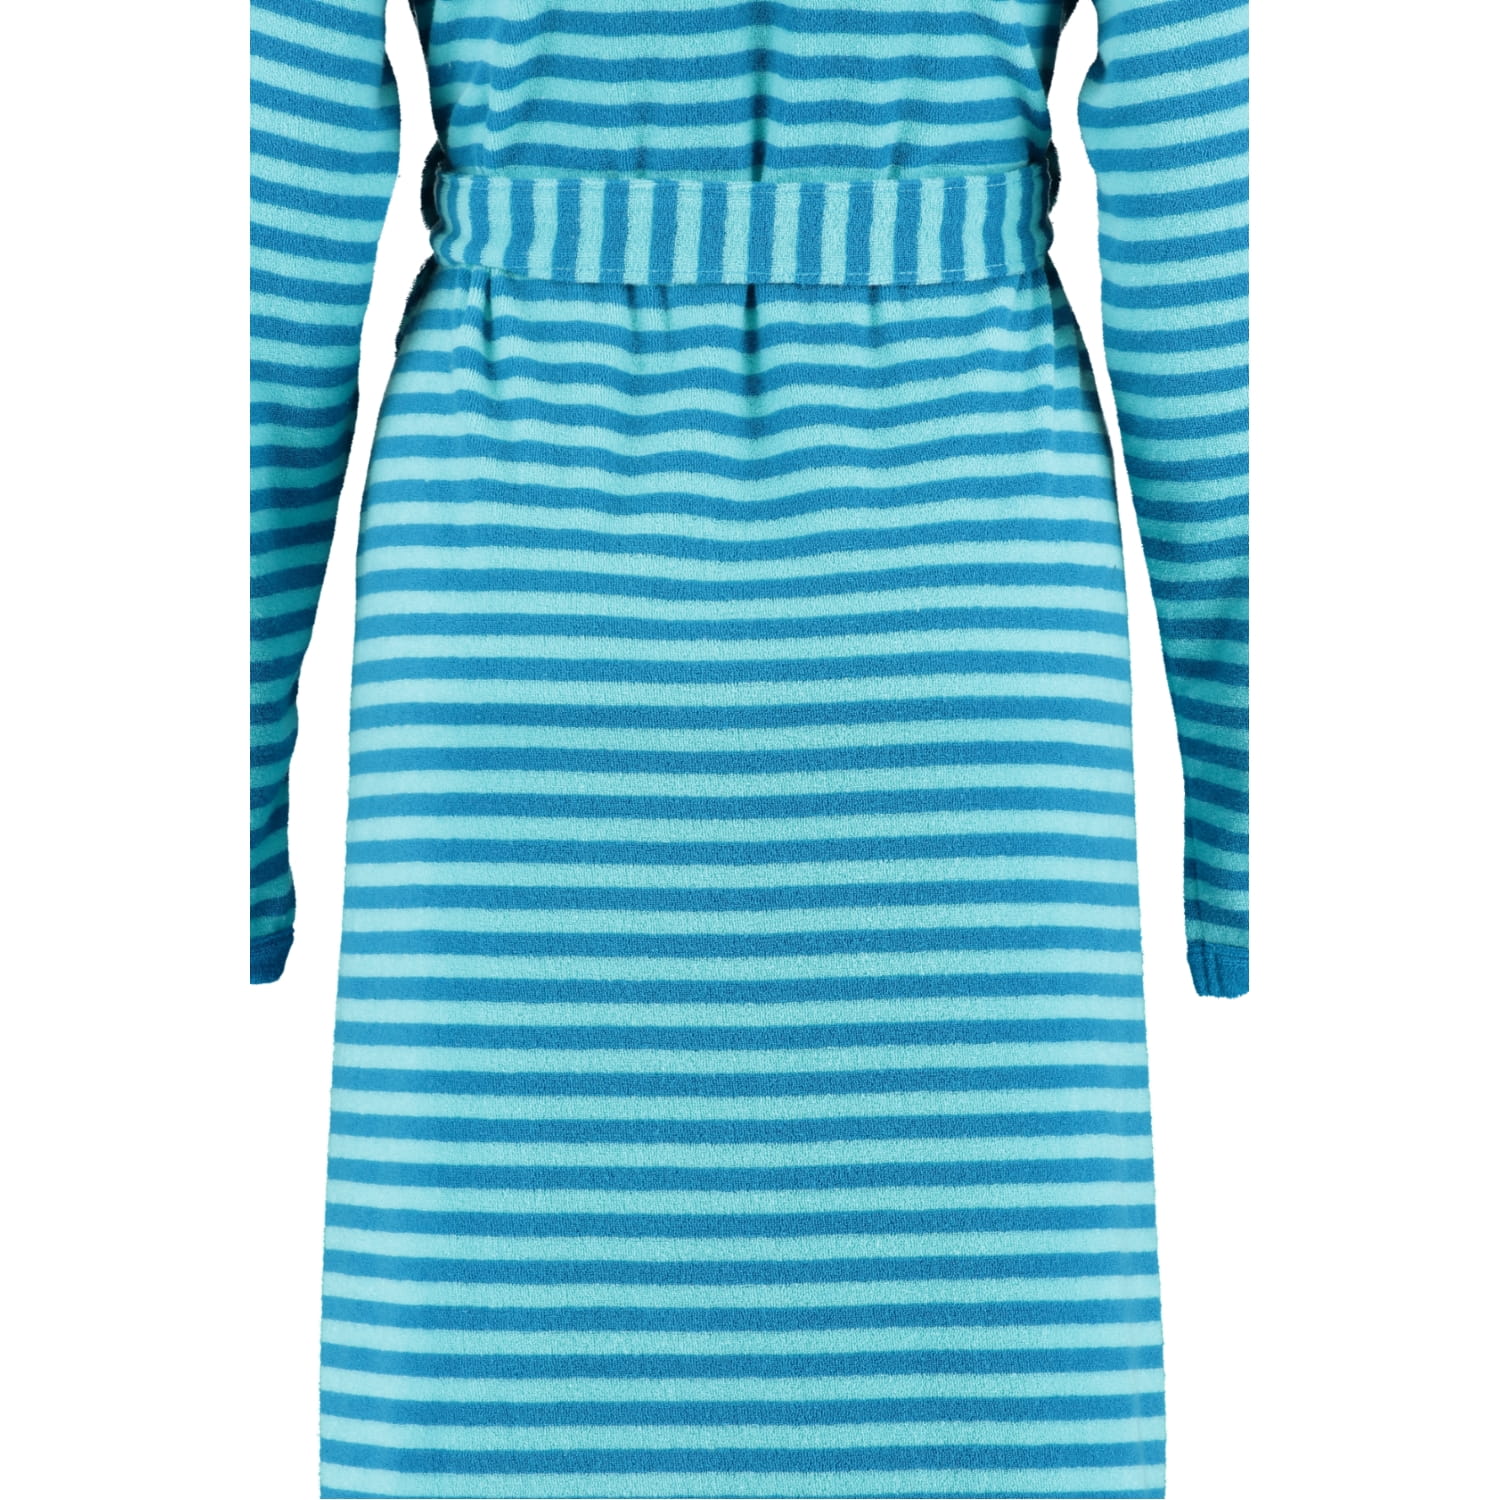 Esprit Damen Hoody - turquoise Damen | Farbe: Bademantel L Bademantel - 002 Striped | Kapuze